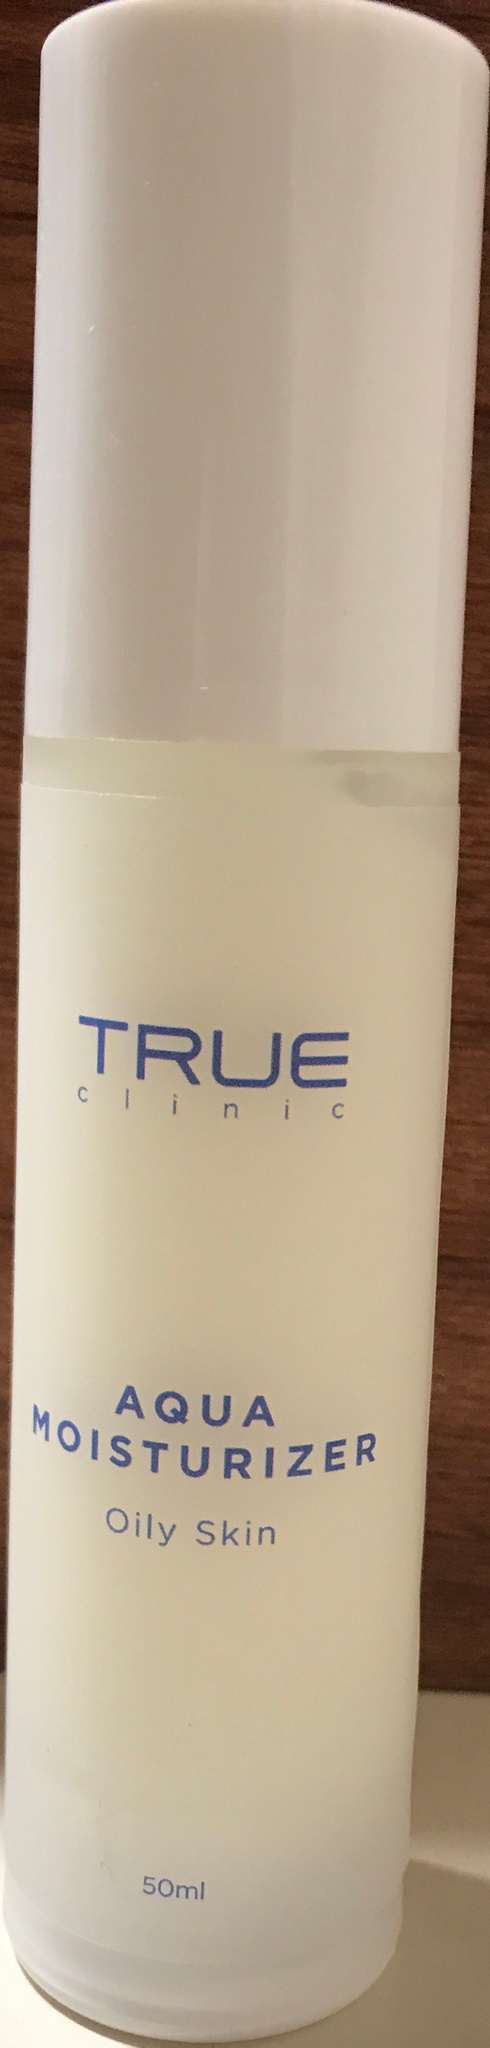 TRUE clinic Aqua Moisturizer Oily Skin